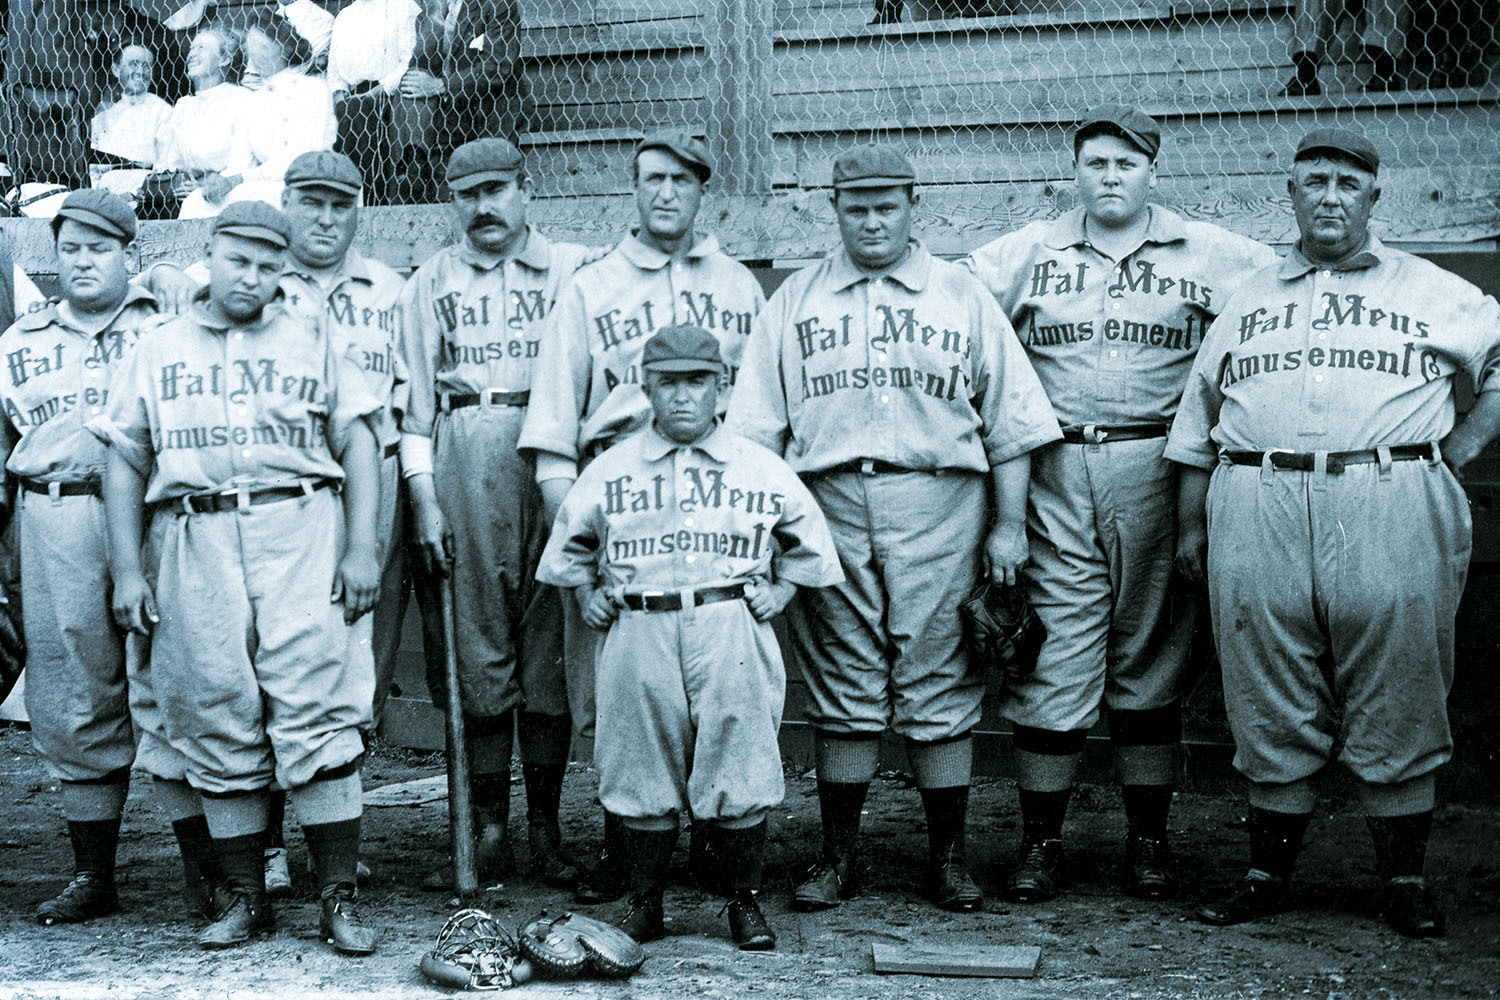 Members of the Fat Man's Baseball Association, circa 1910